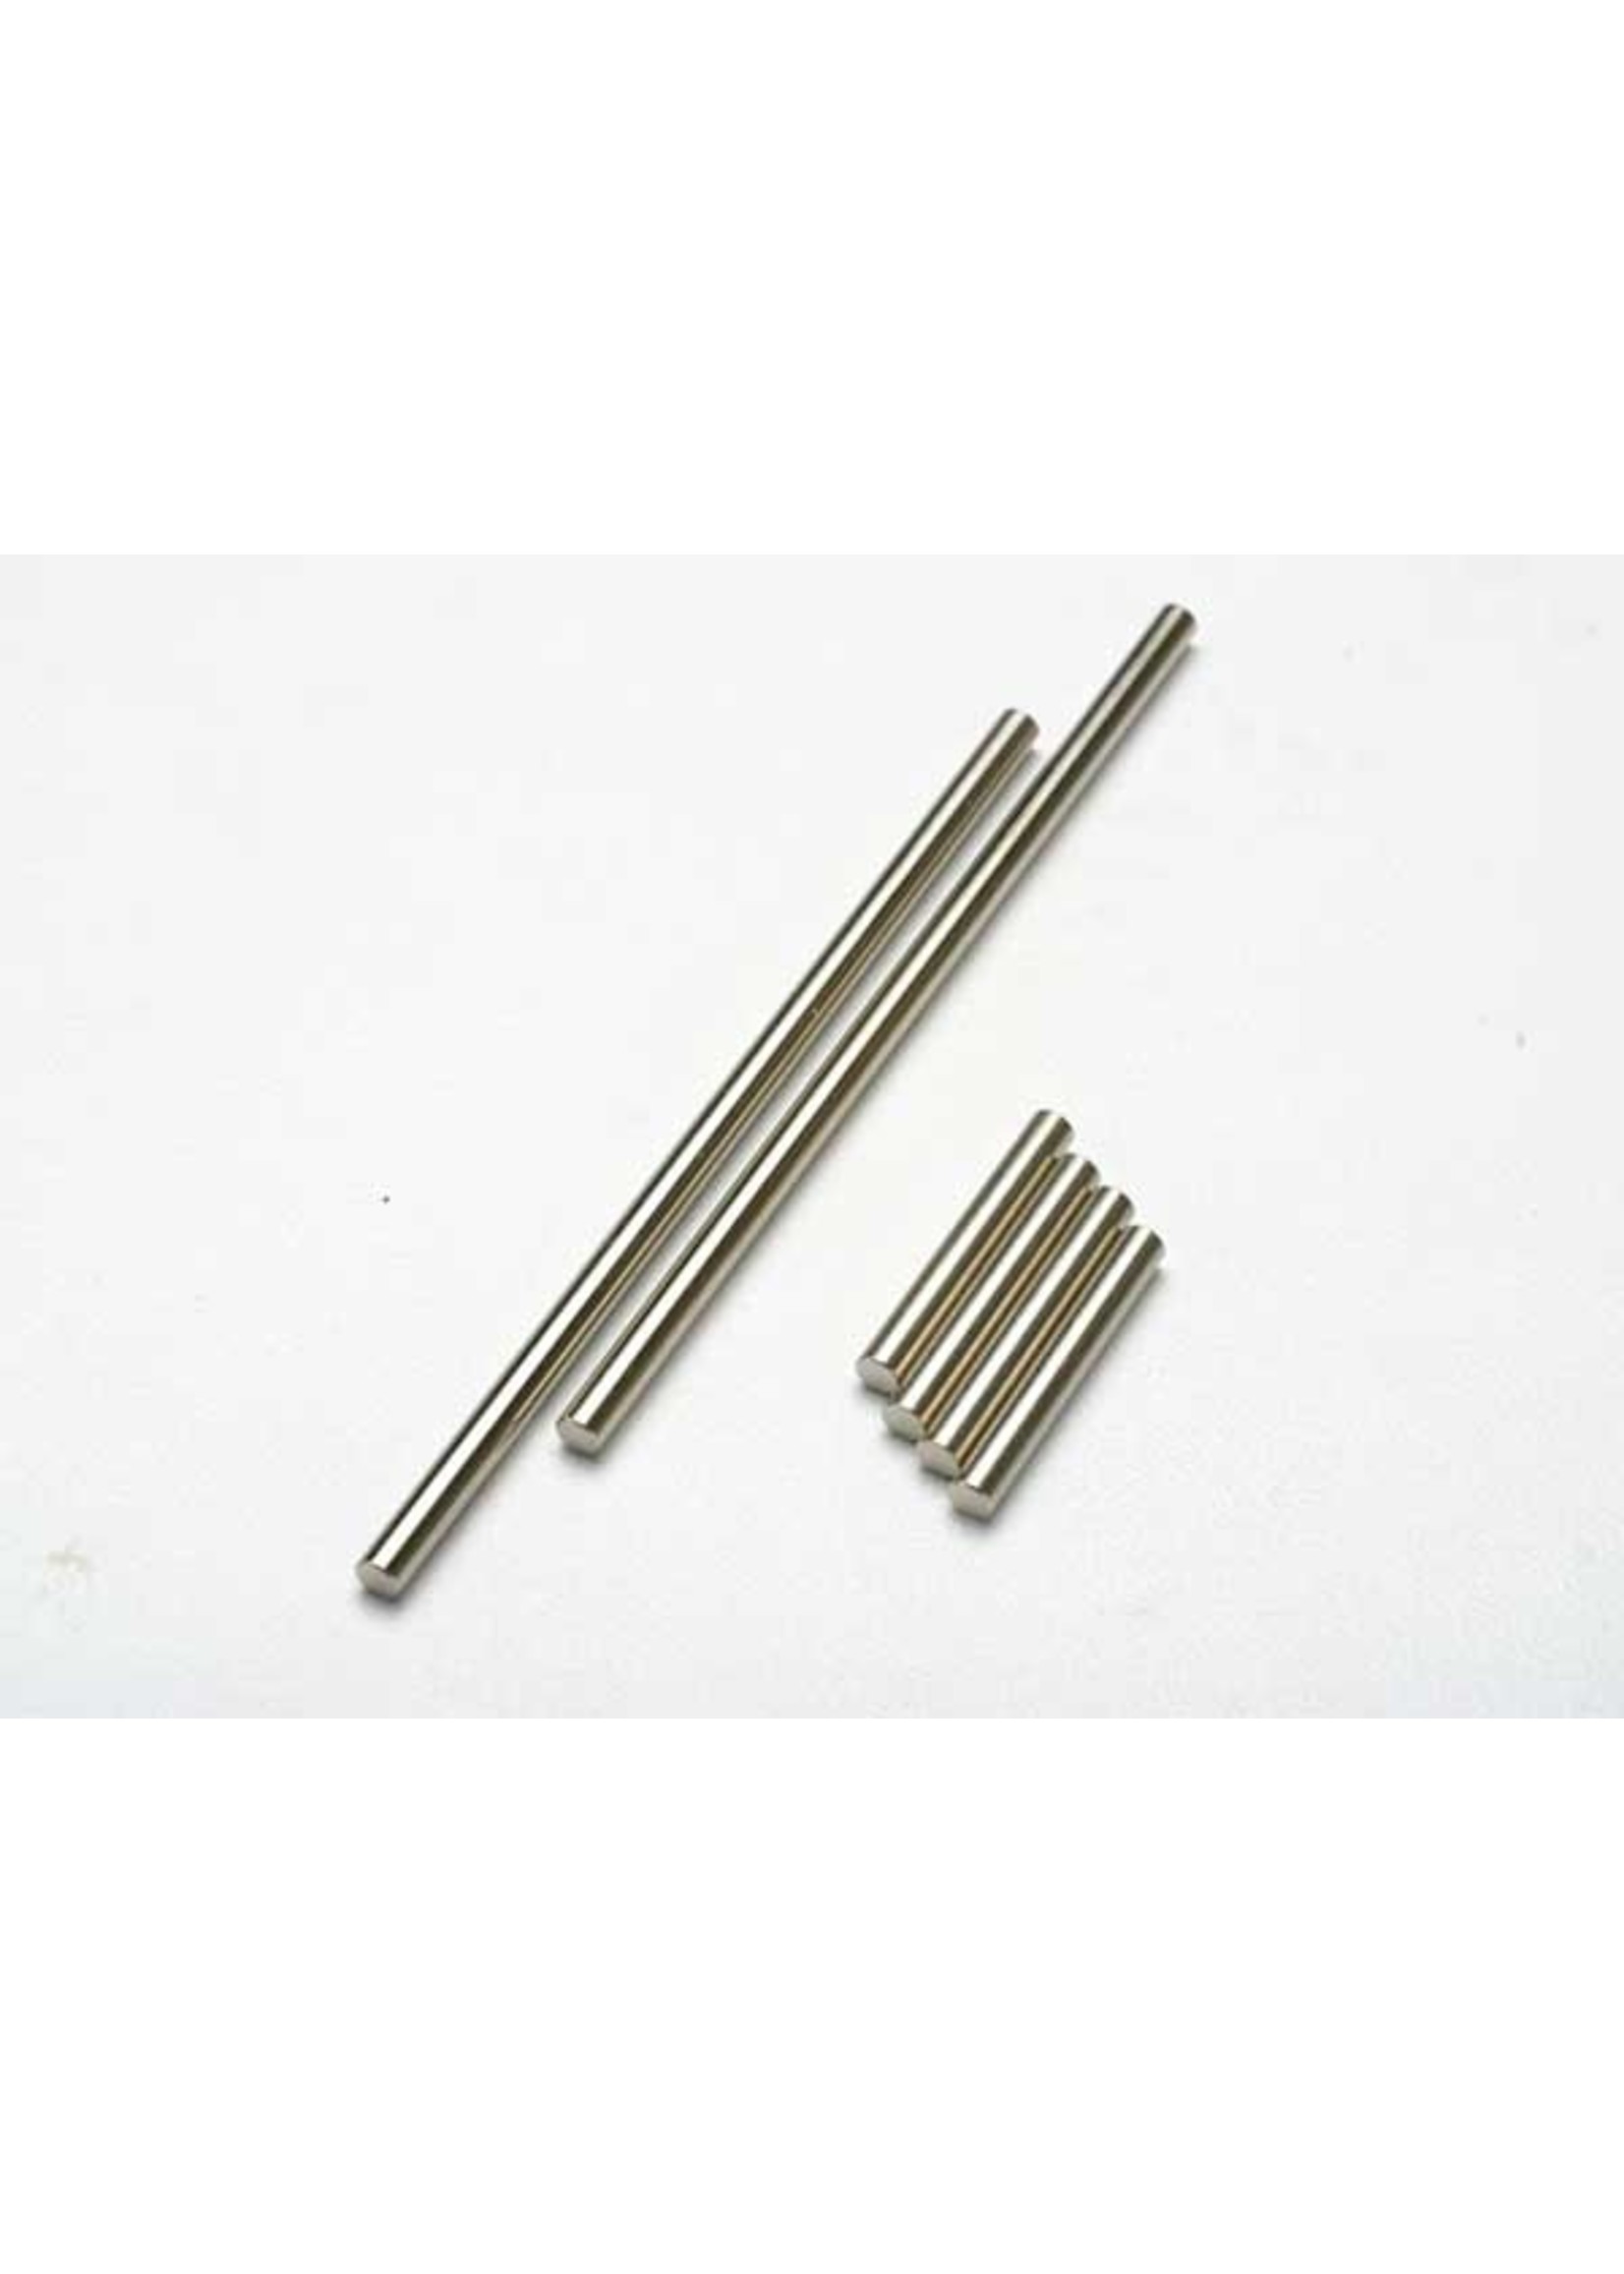 Traxxas 5321 - Steel Suspension Pin Set for Revo